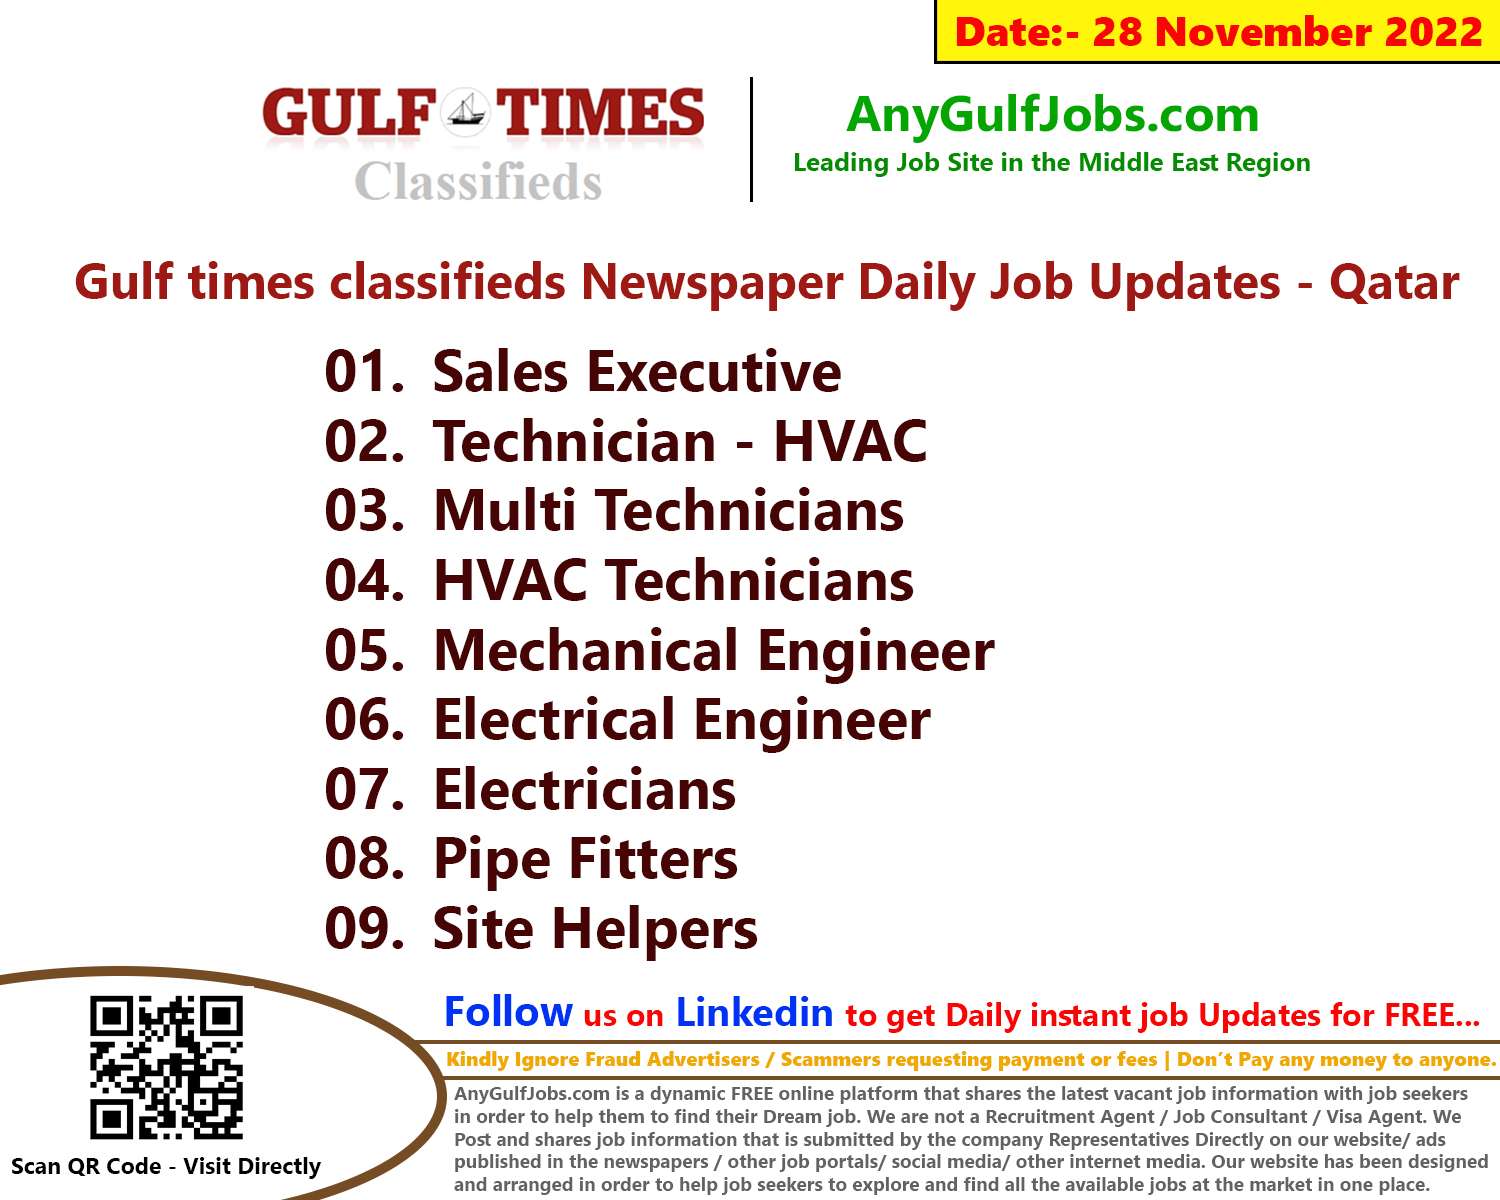 Gulf times classifieds Job Vacancies Qatar - 28 November 2022